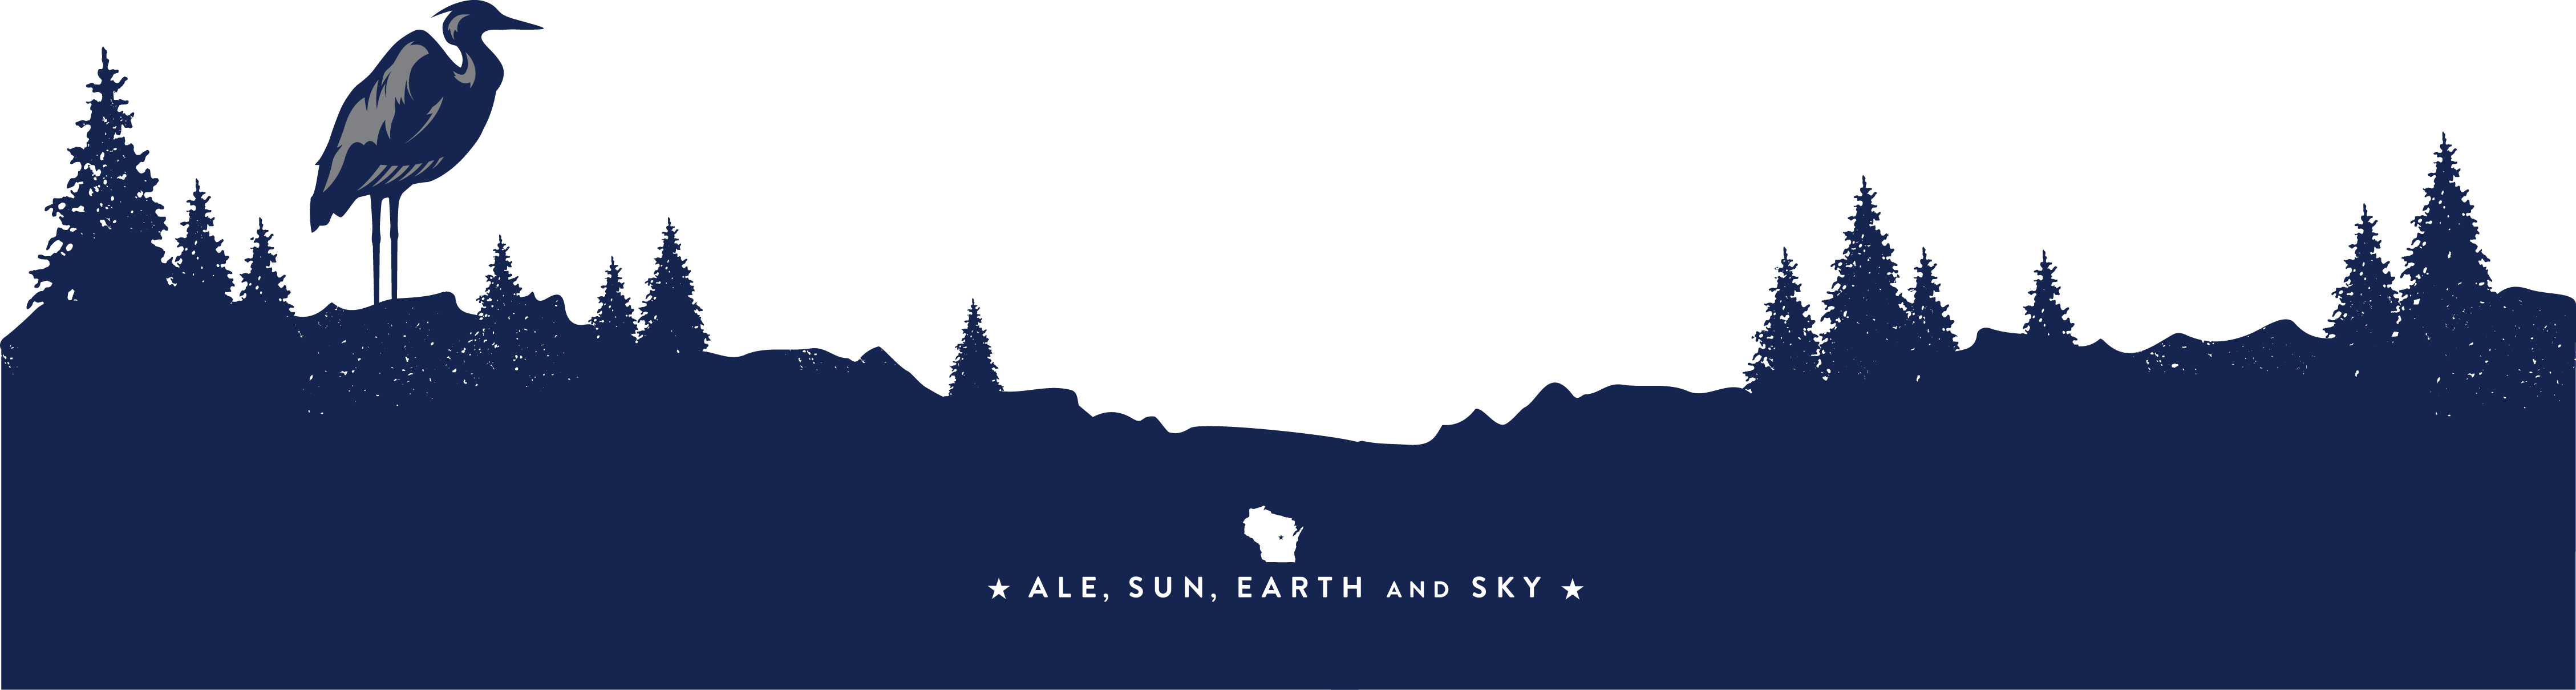 Ale Sun Earth and Sky